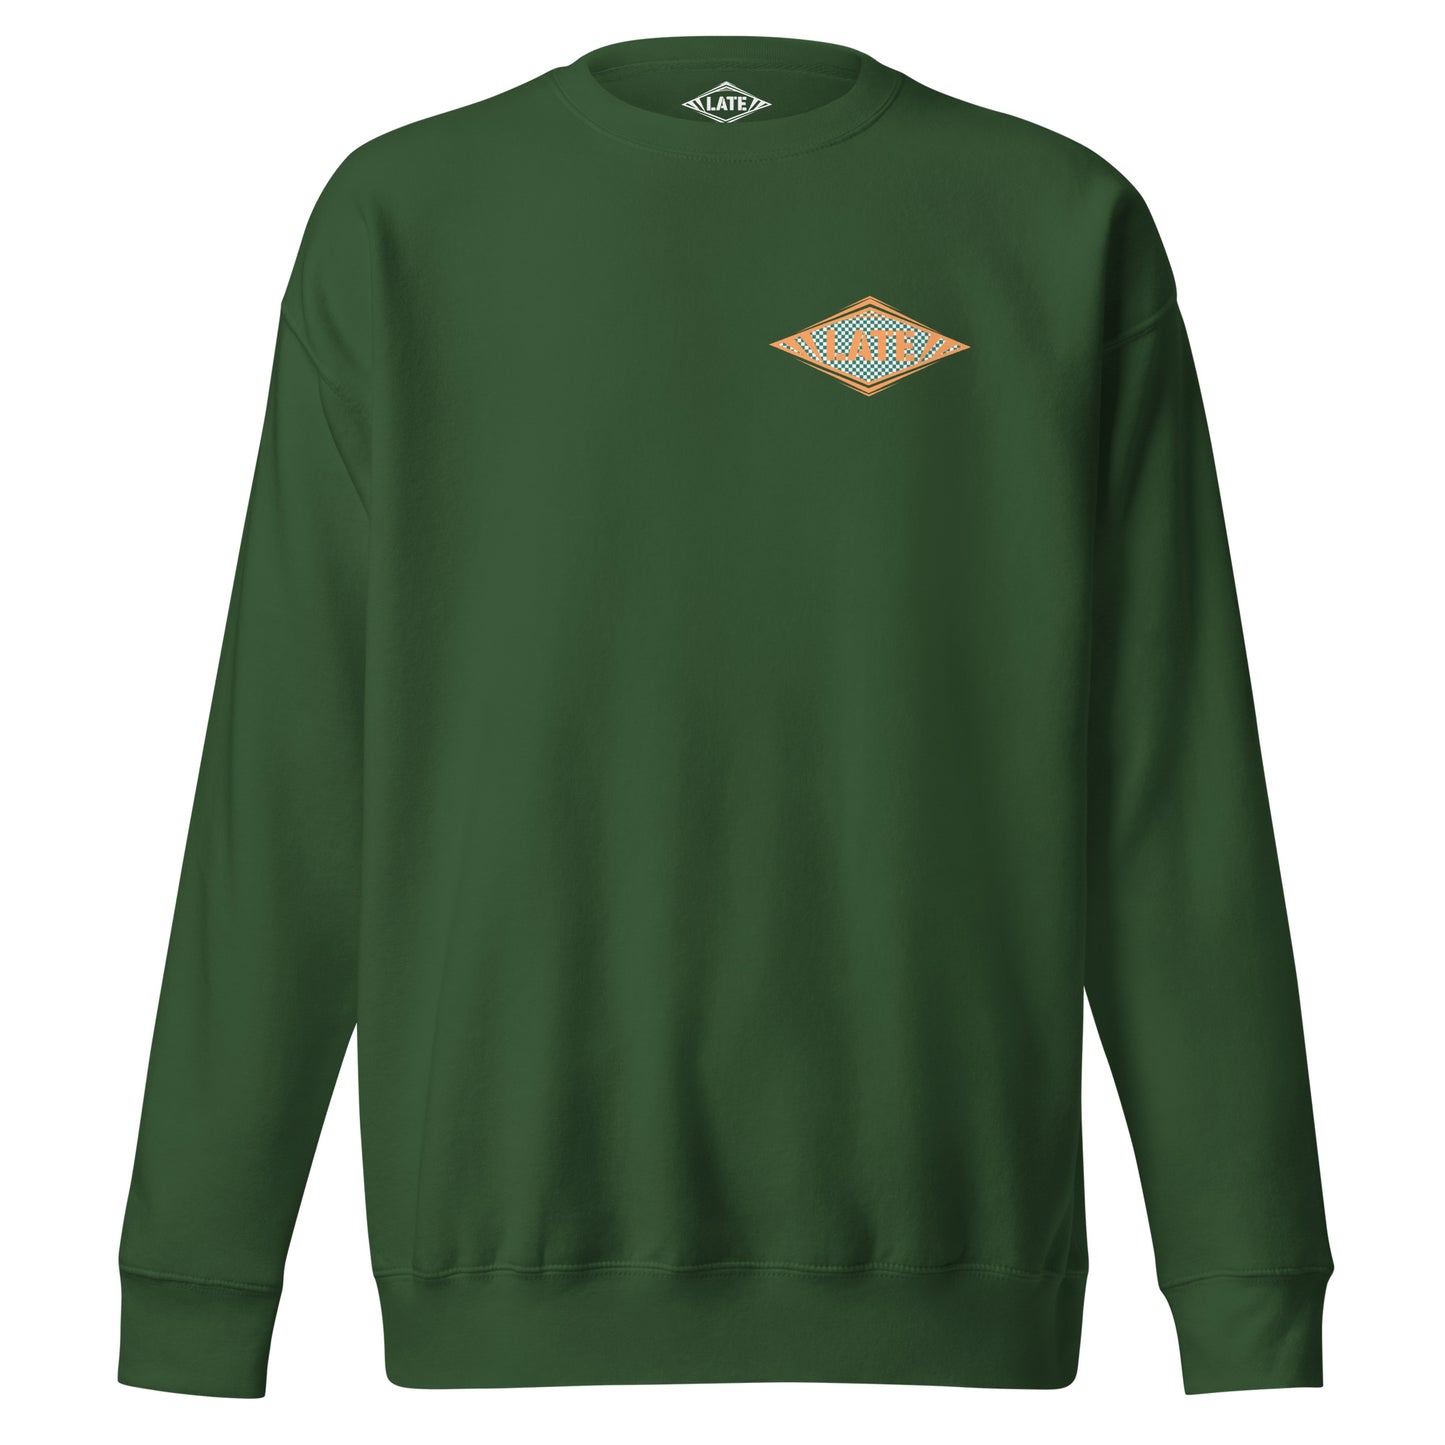 Sweatshirt Shred It logo Late à carreaux style Vans skateboarding sweat-shirt unisex couleur vert